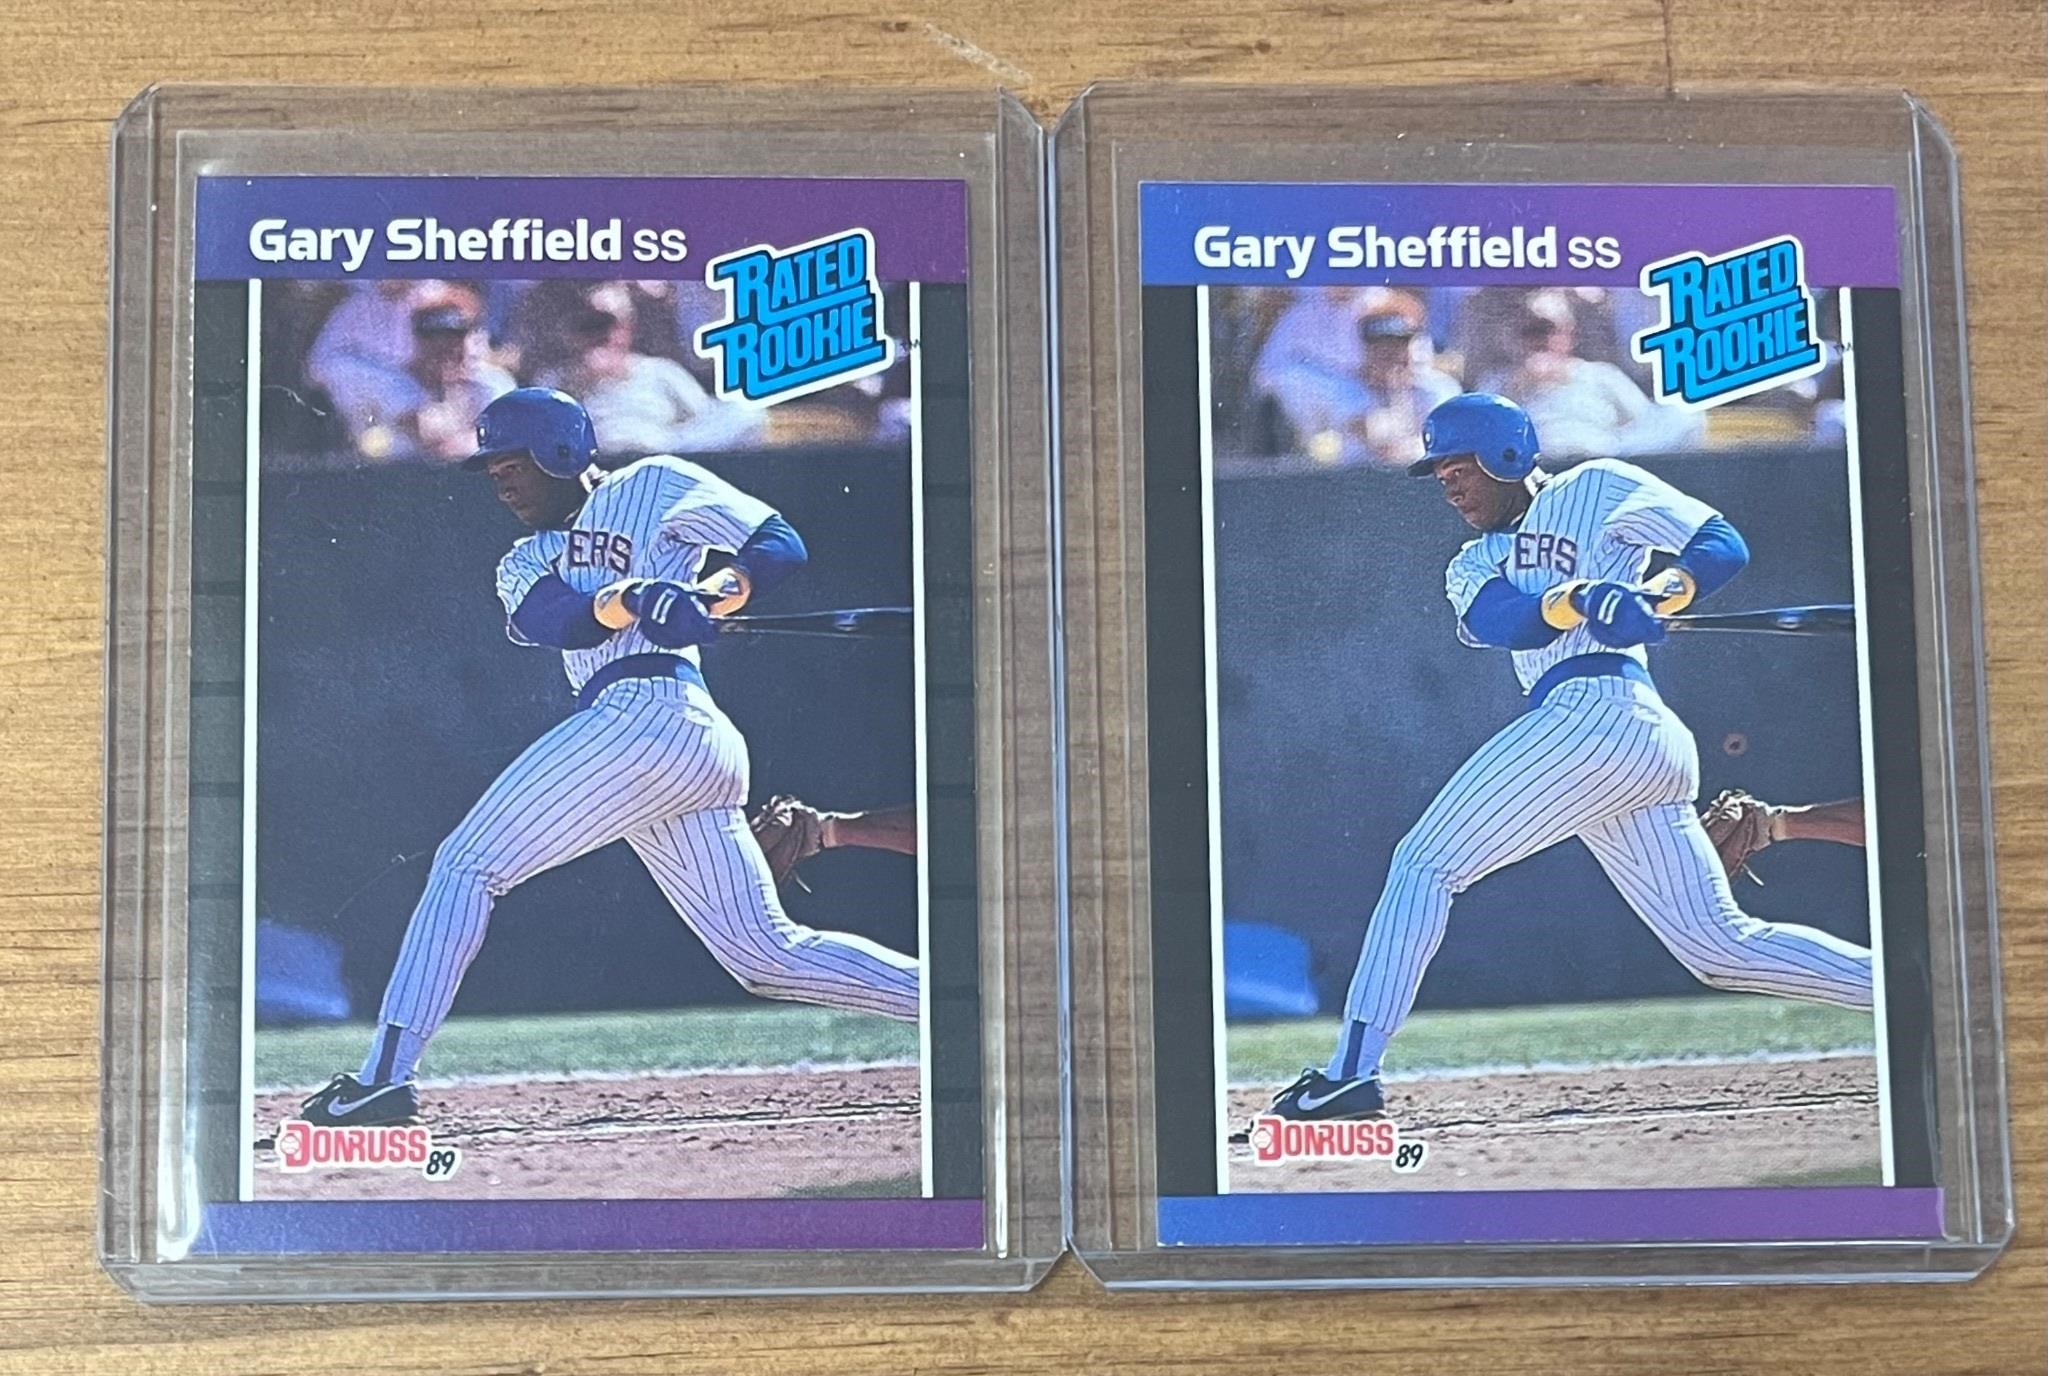 Lot of 2 1988 Gary Sheffield RC Donruss #31 cards